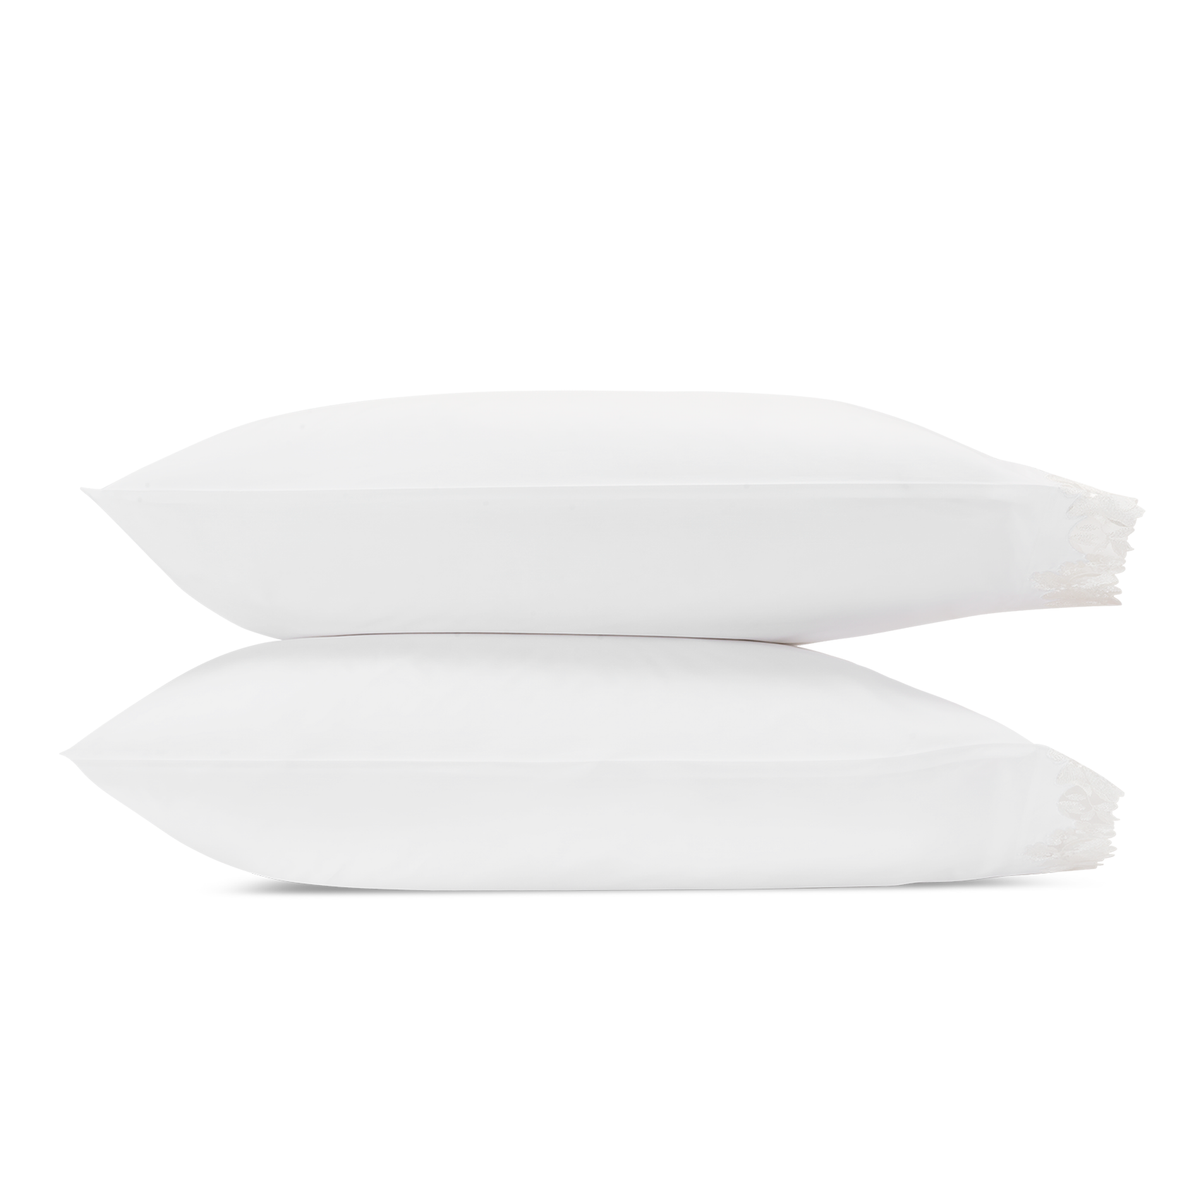 Pair of Pillowcase of Matouk Virginia Bedding in Color White